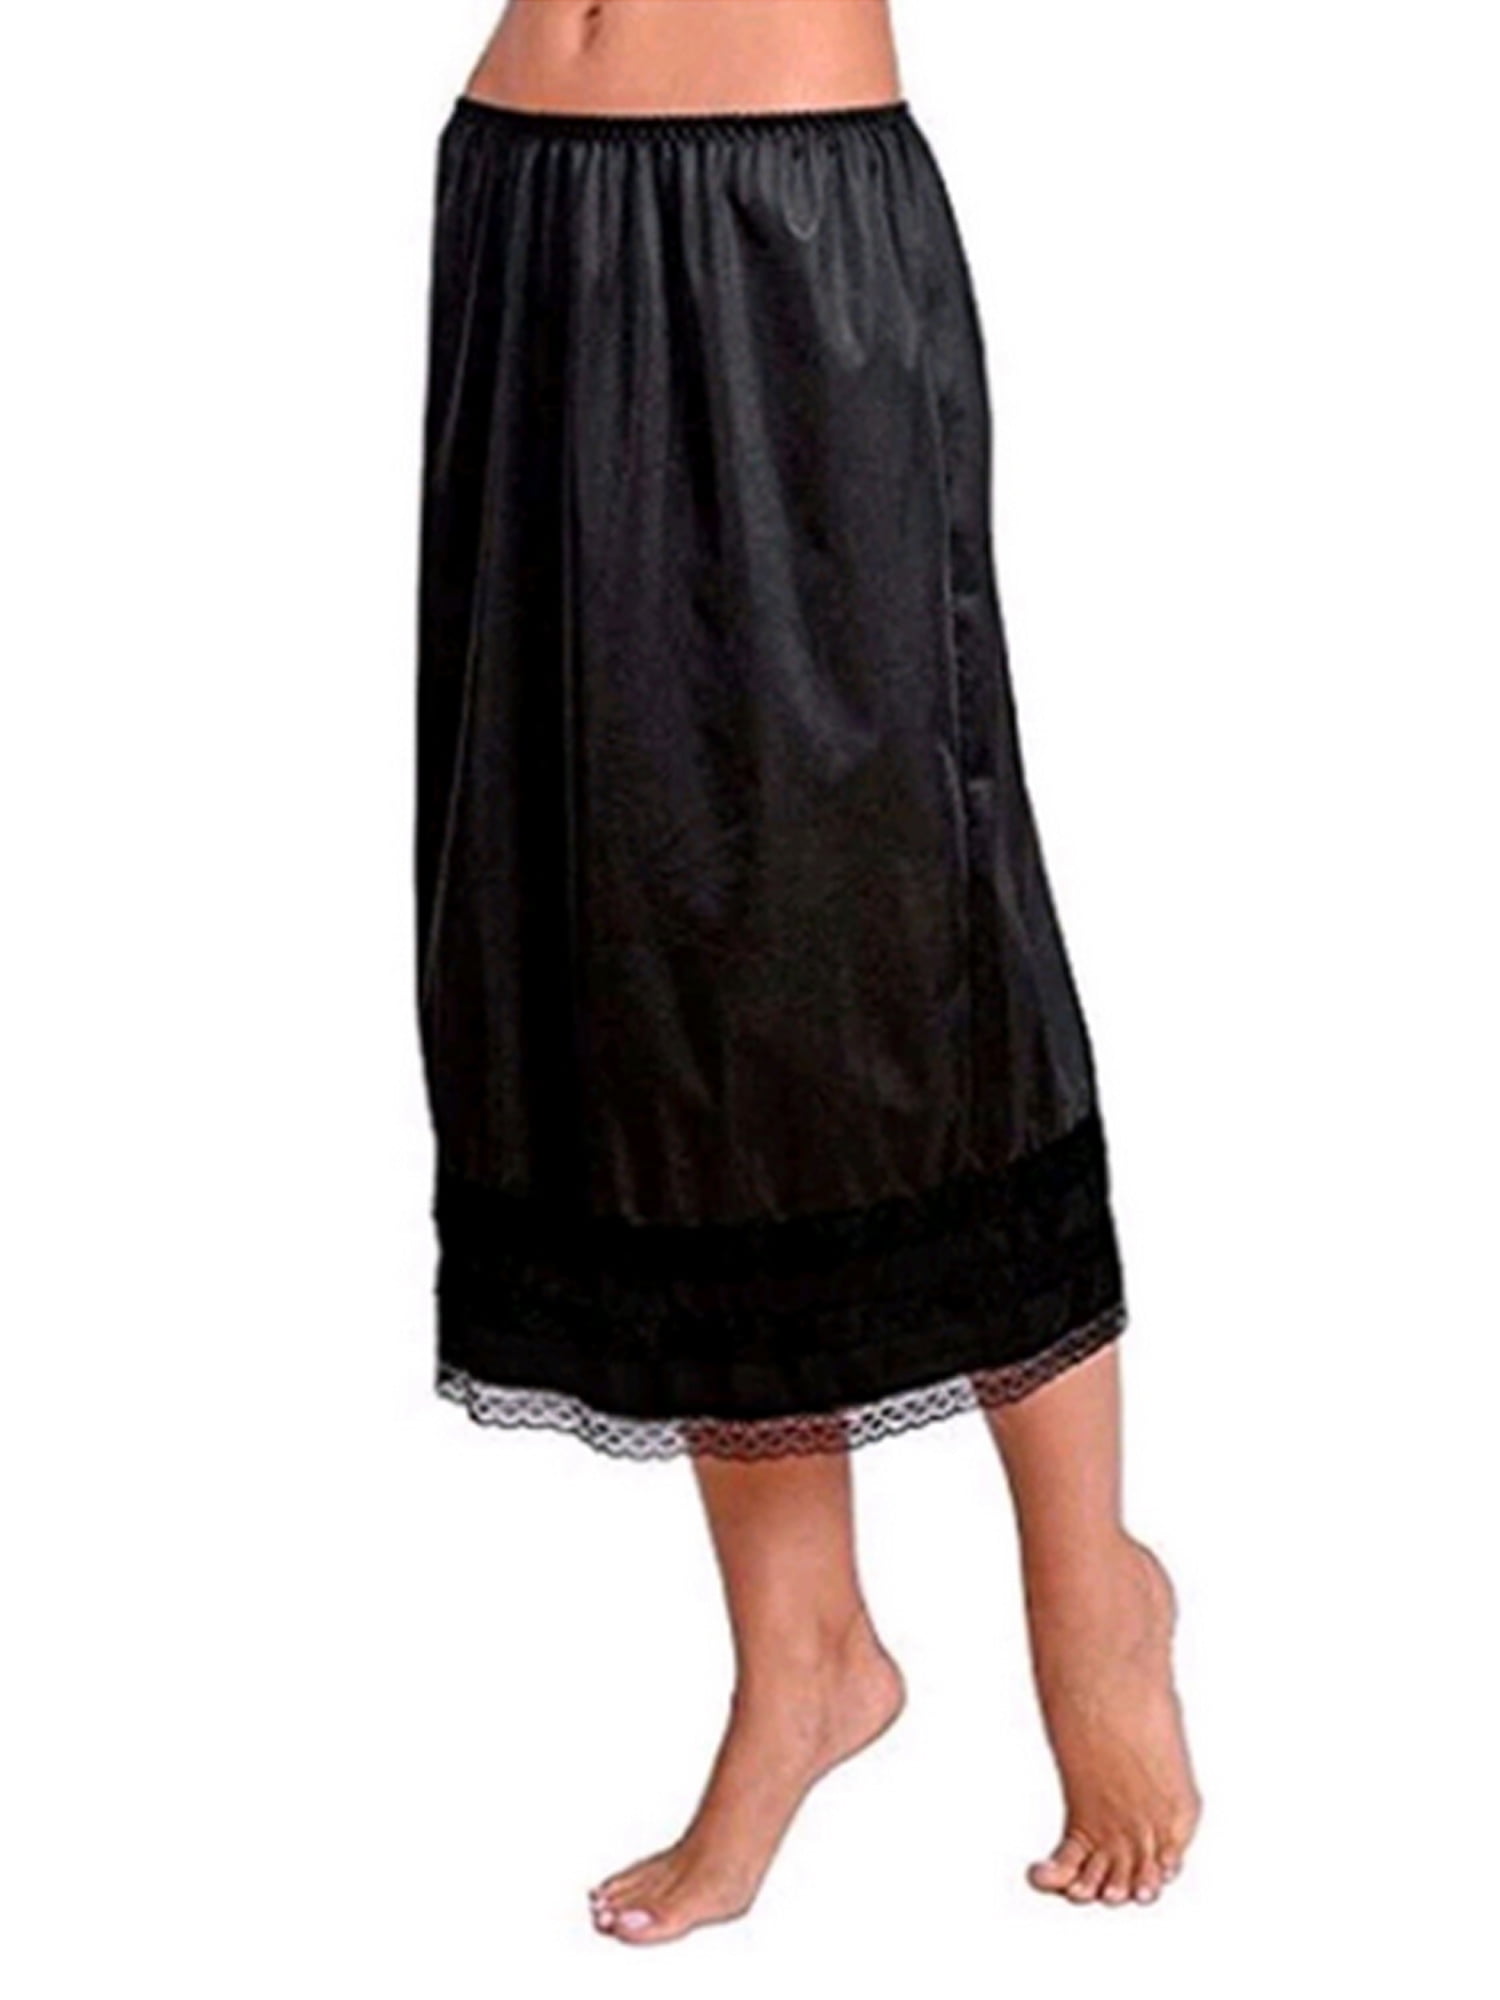 QRIC High Waist Half Slips for Women Under Dresses Shapewear Tummy Control  Slip Dress Seamless Bodyshaper Slimming Skirt - Single Pack